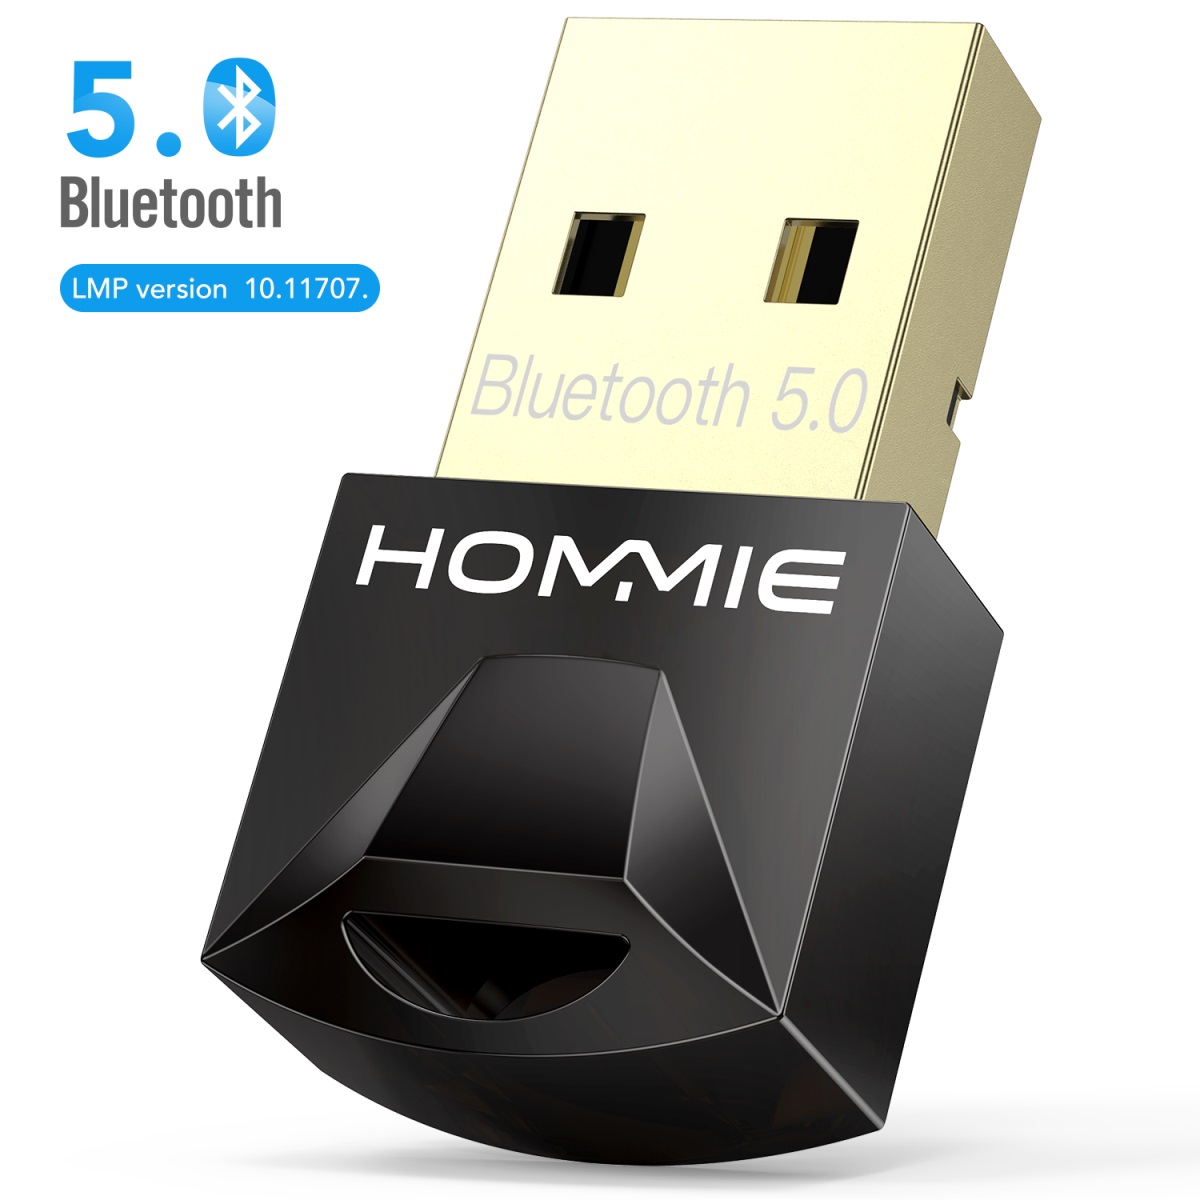 Ver5.0 Bluetoothアダプターでワイヤレス通信を簡単に追加！消費電力が約半分になる省エネ設計◎  【最新版】Bluetooth 5.0 Bluetoothアダプター Bluetooth USBアダプタ ブルートゥース子機 bluetooth レシーバー パソコン PC /ナノサイズ Bluetooth USB アダプタ Class2 Windows10対応 apt-X 対応 Bluetooth Dongle 超小型 Ver5.0 apt-x EDR/LE対応(省電力) ドングル